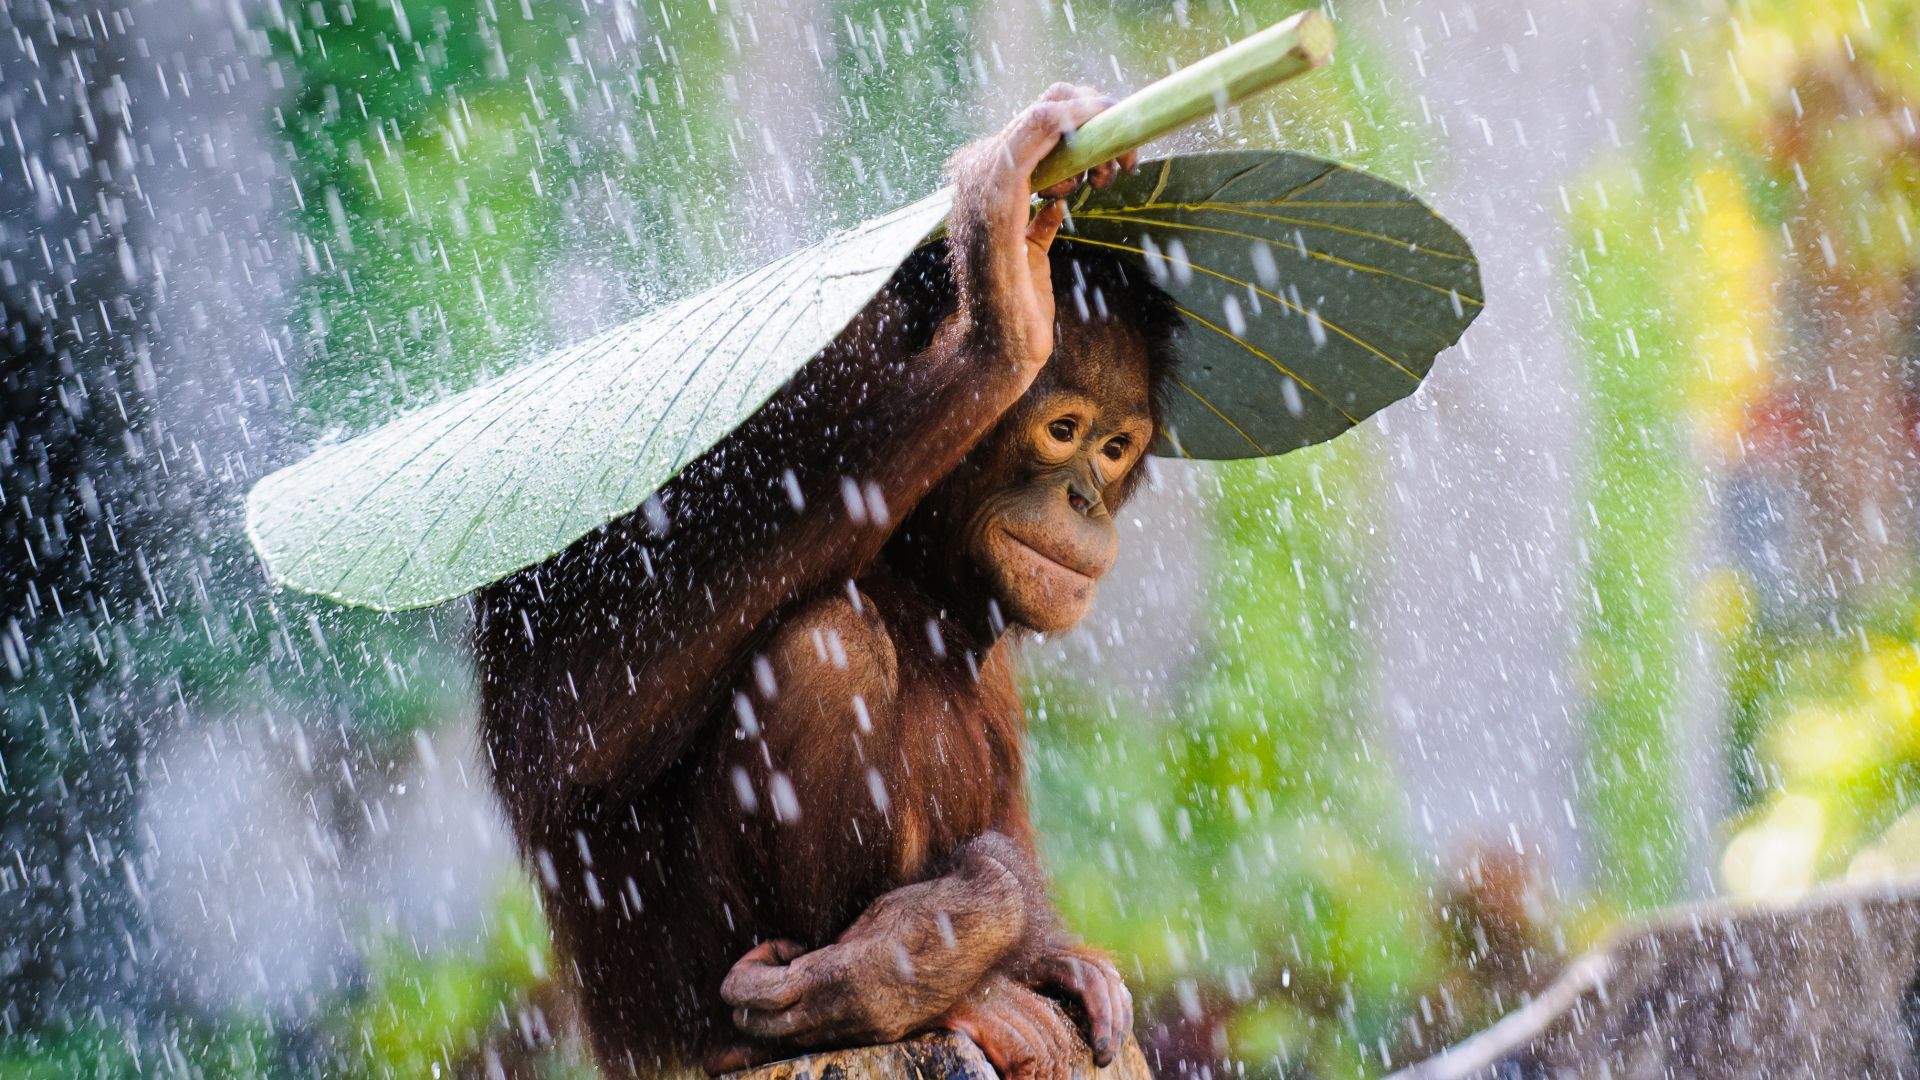 орангутанг, Бали, дождь, обезьяна, 2015 Sony World Photography Awards, Orangutan, Bali, rain, monkey, 2015 Sony World Photography Awards (horizontal)